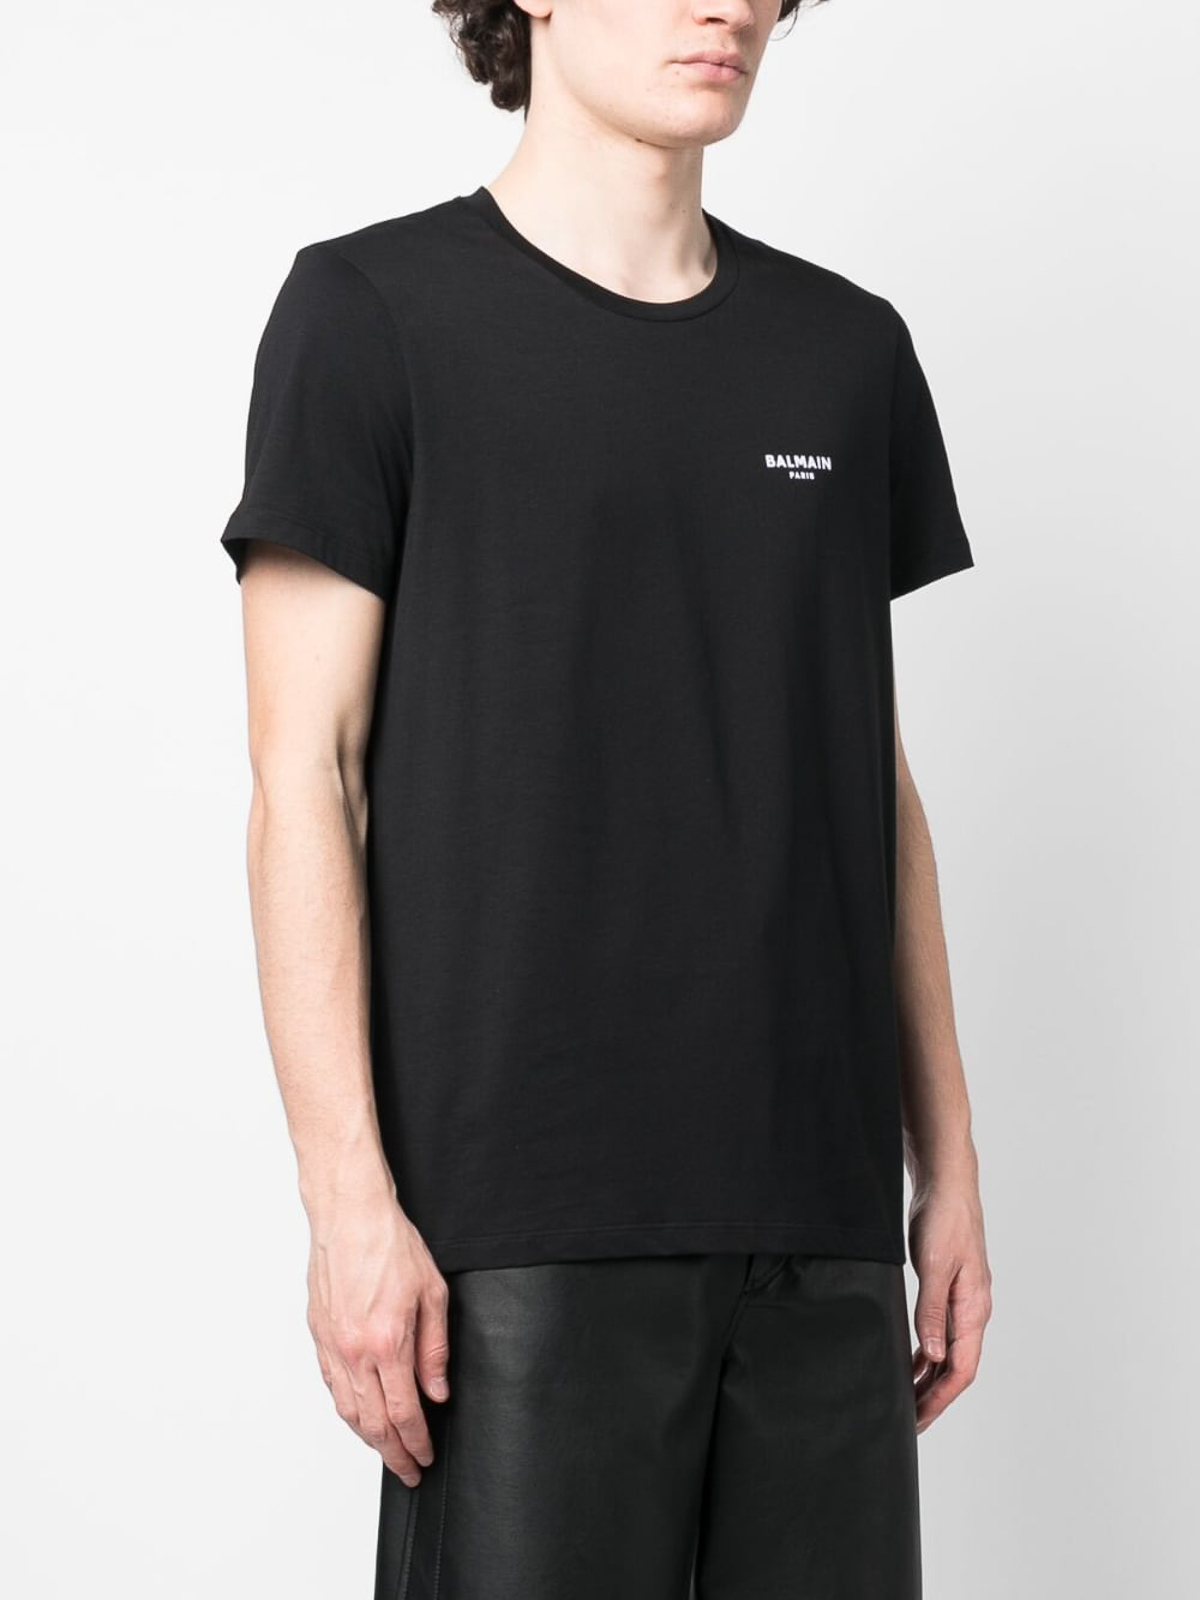 Off-White logo-print Short-Sleeve T-Shirt